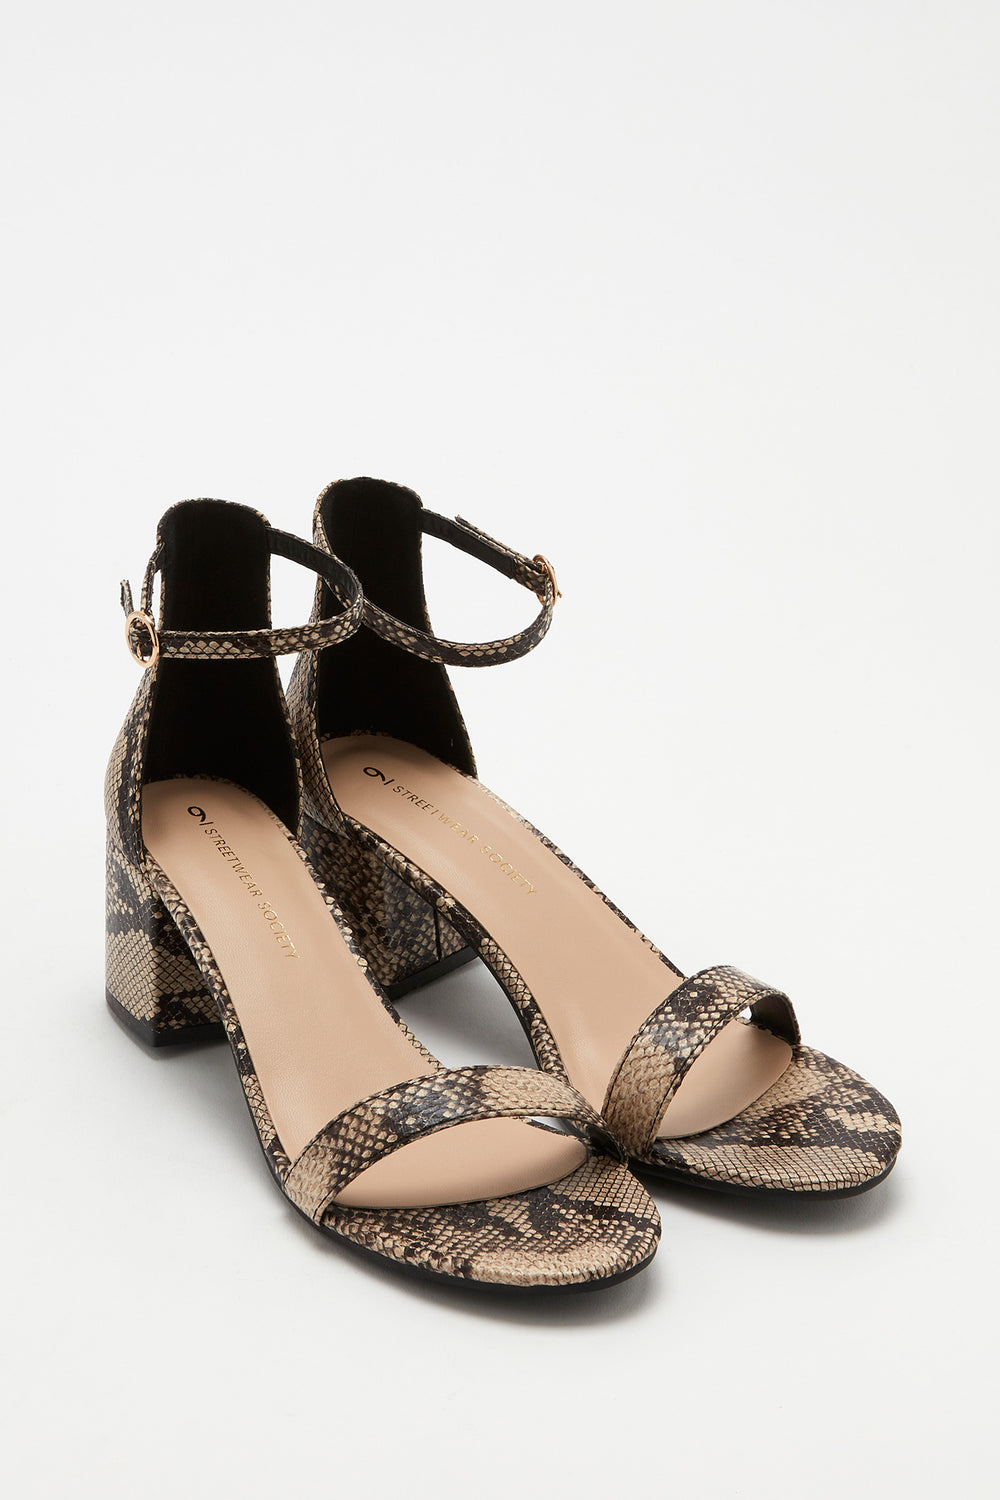 charlotte russe white heels